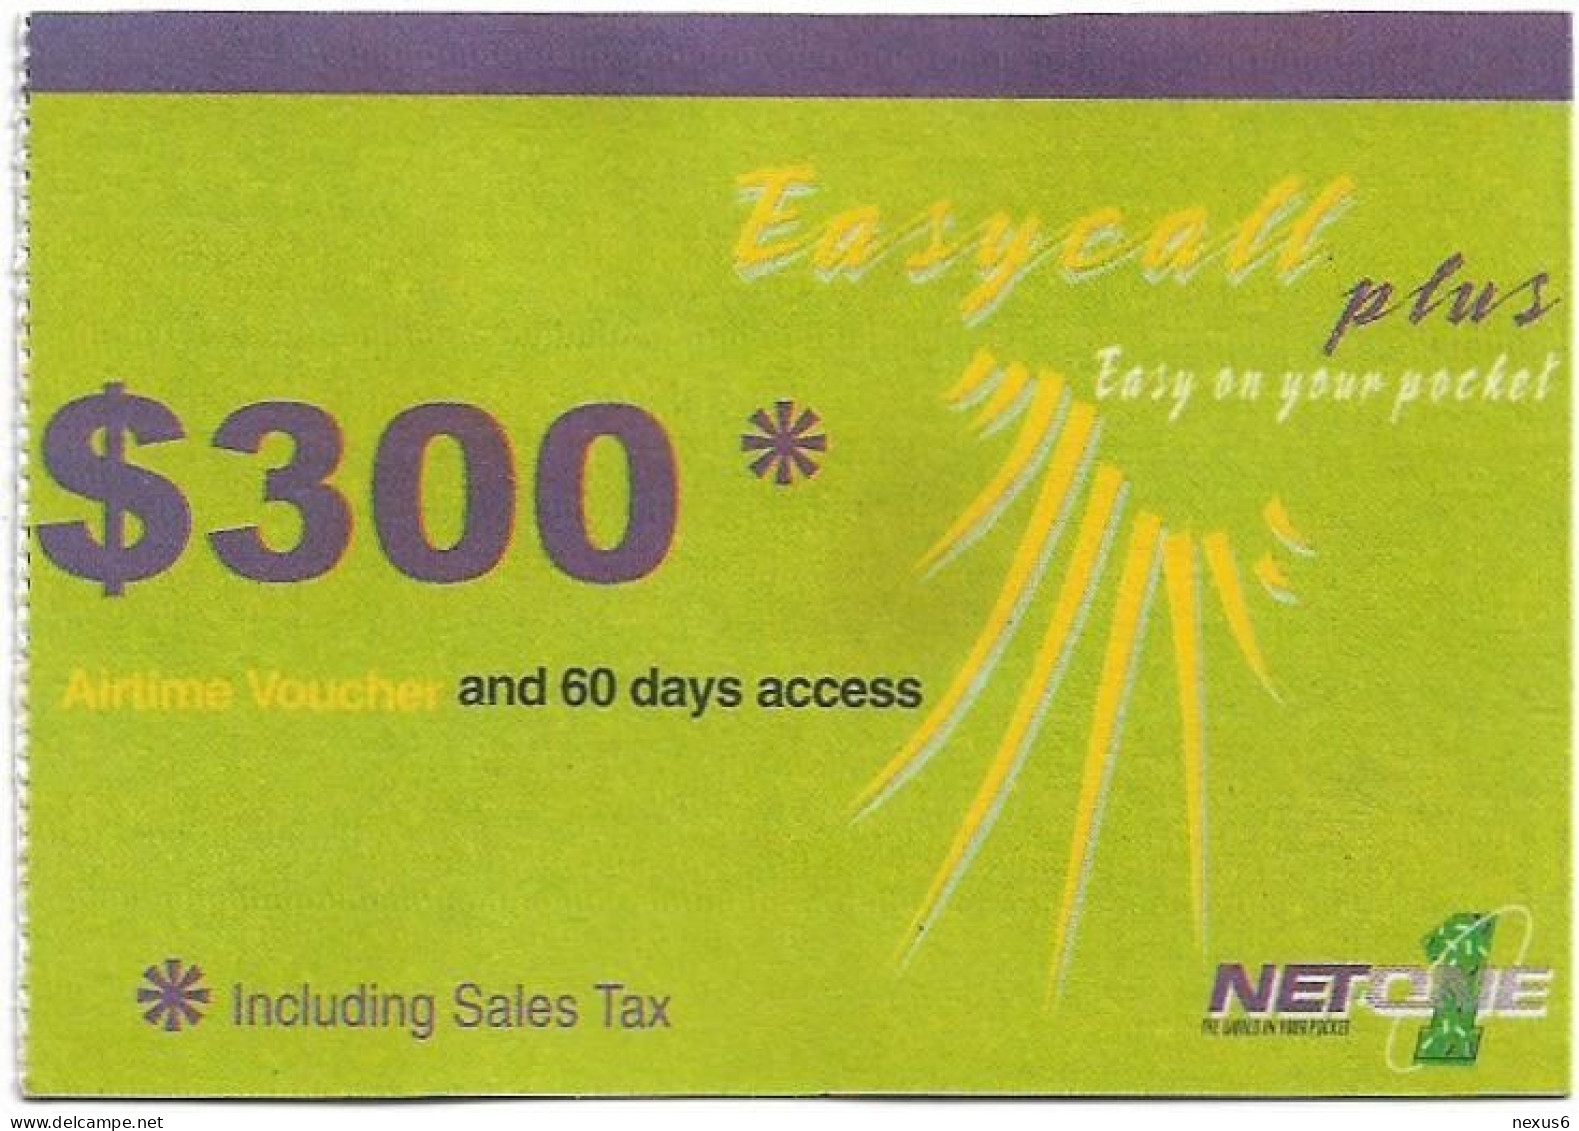 Zimbabwe - NET1ONE - EasyCall Plus Airtime, Big Size GSM Refill 300$, Used - Simbabwe